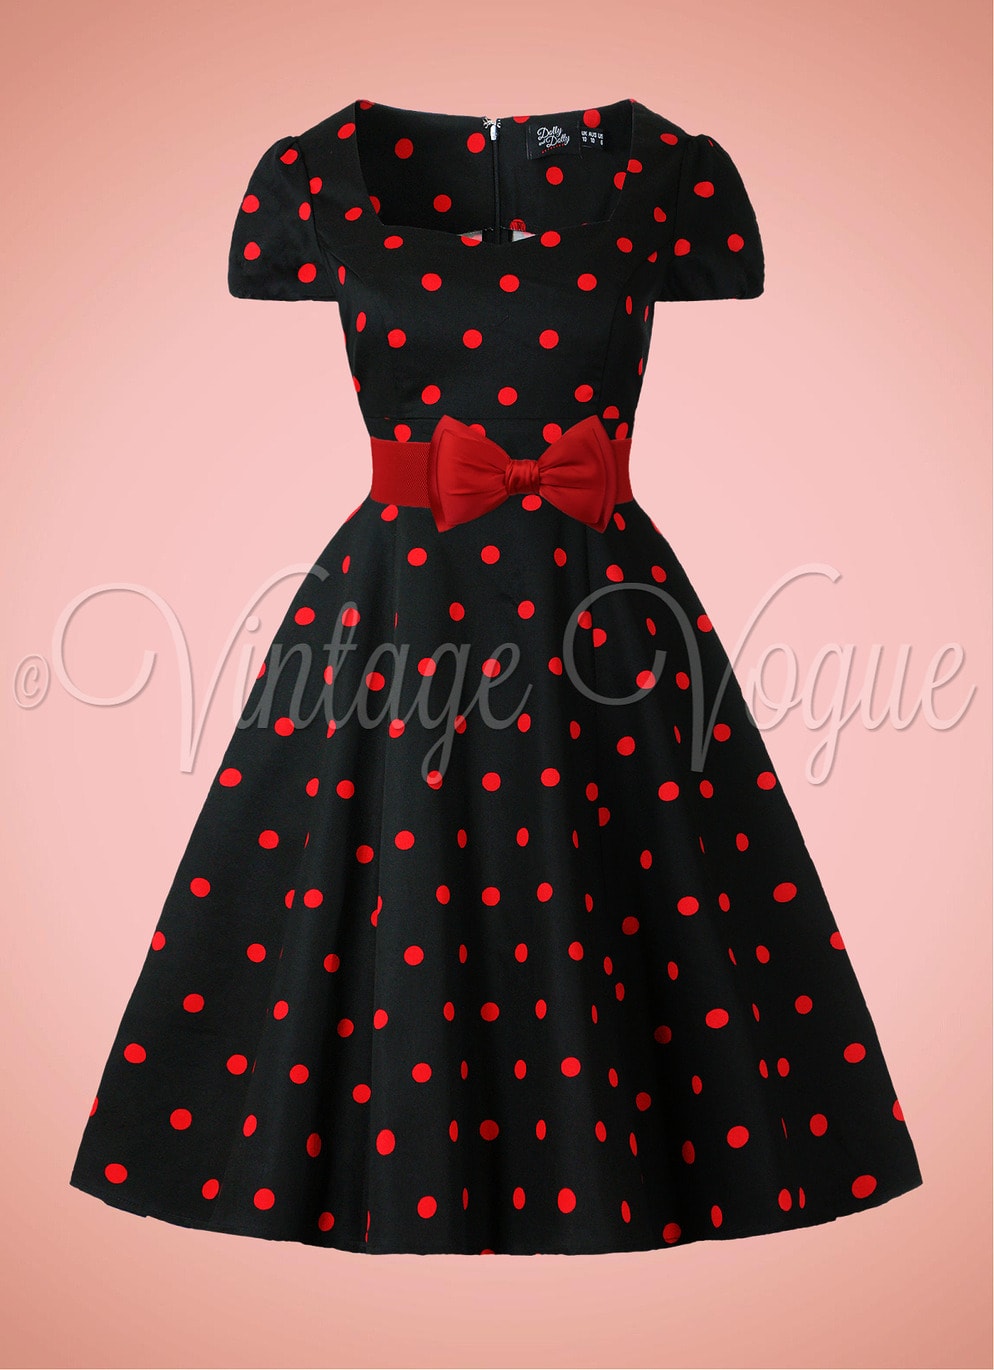 Dolly and Dotty 50's Retro Rockabilly Swing Kleid Claudia Spreaded Dot Dress in Schwarz Rot Punkte gepunktet 50er Jahre Kleid 1695-10